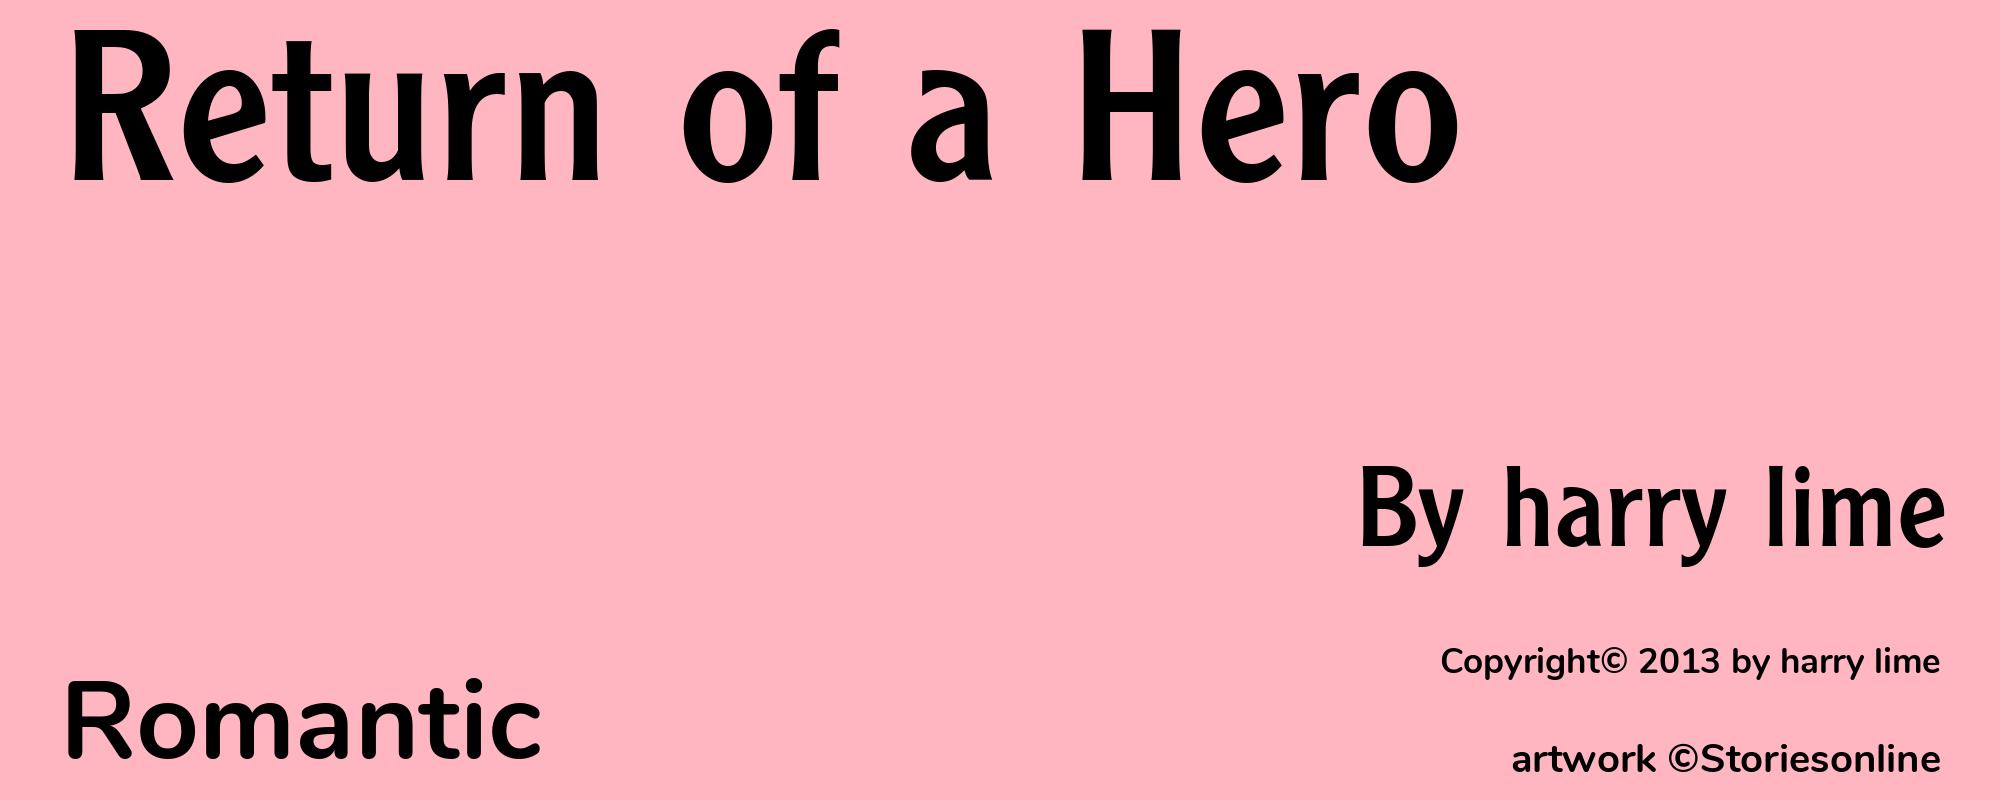 Return of a Hero - Cover